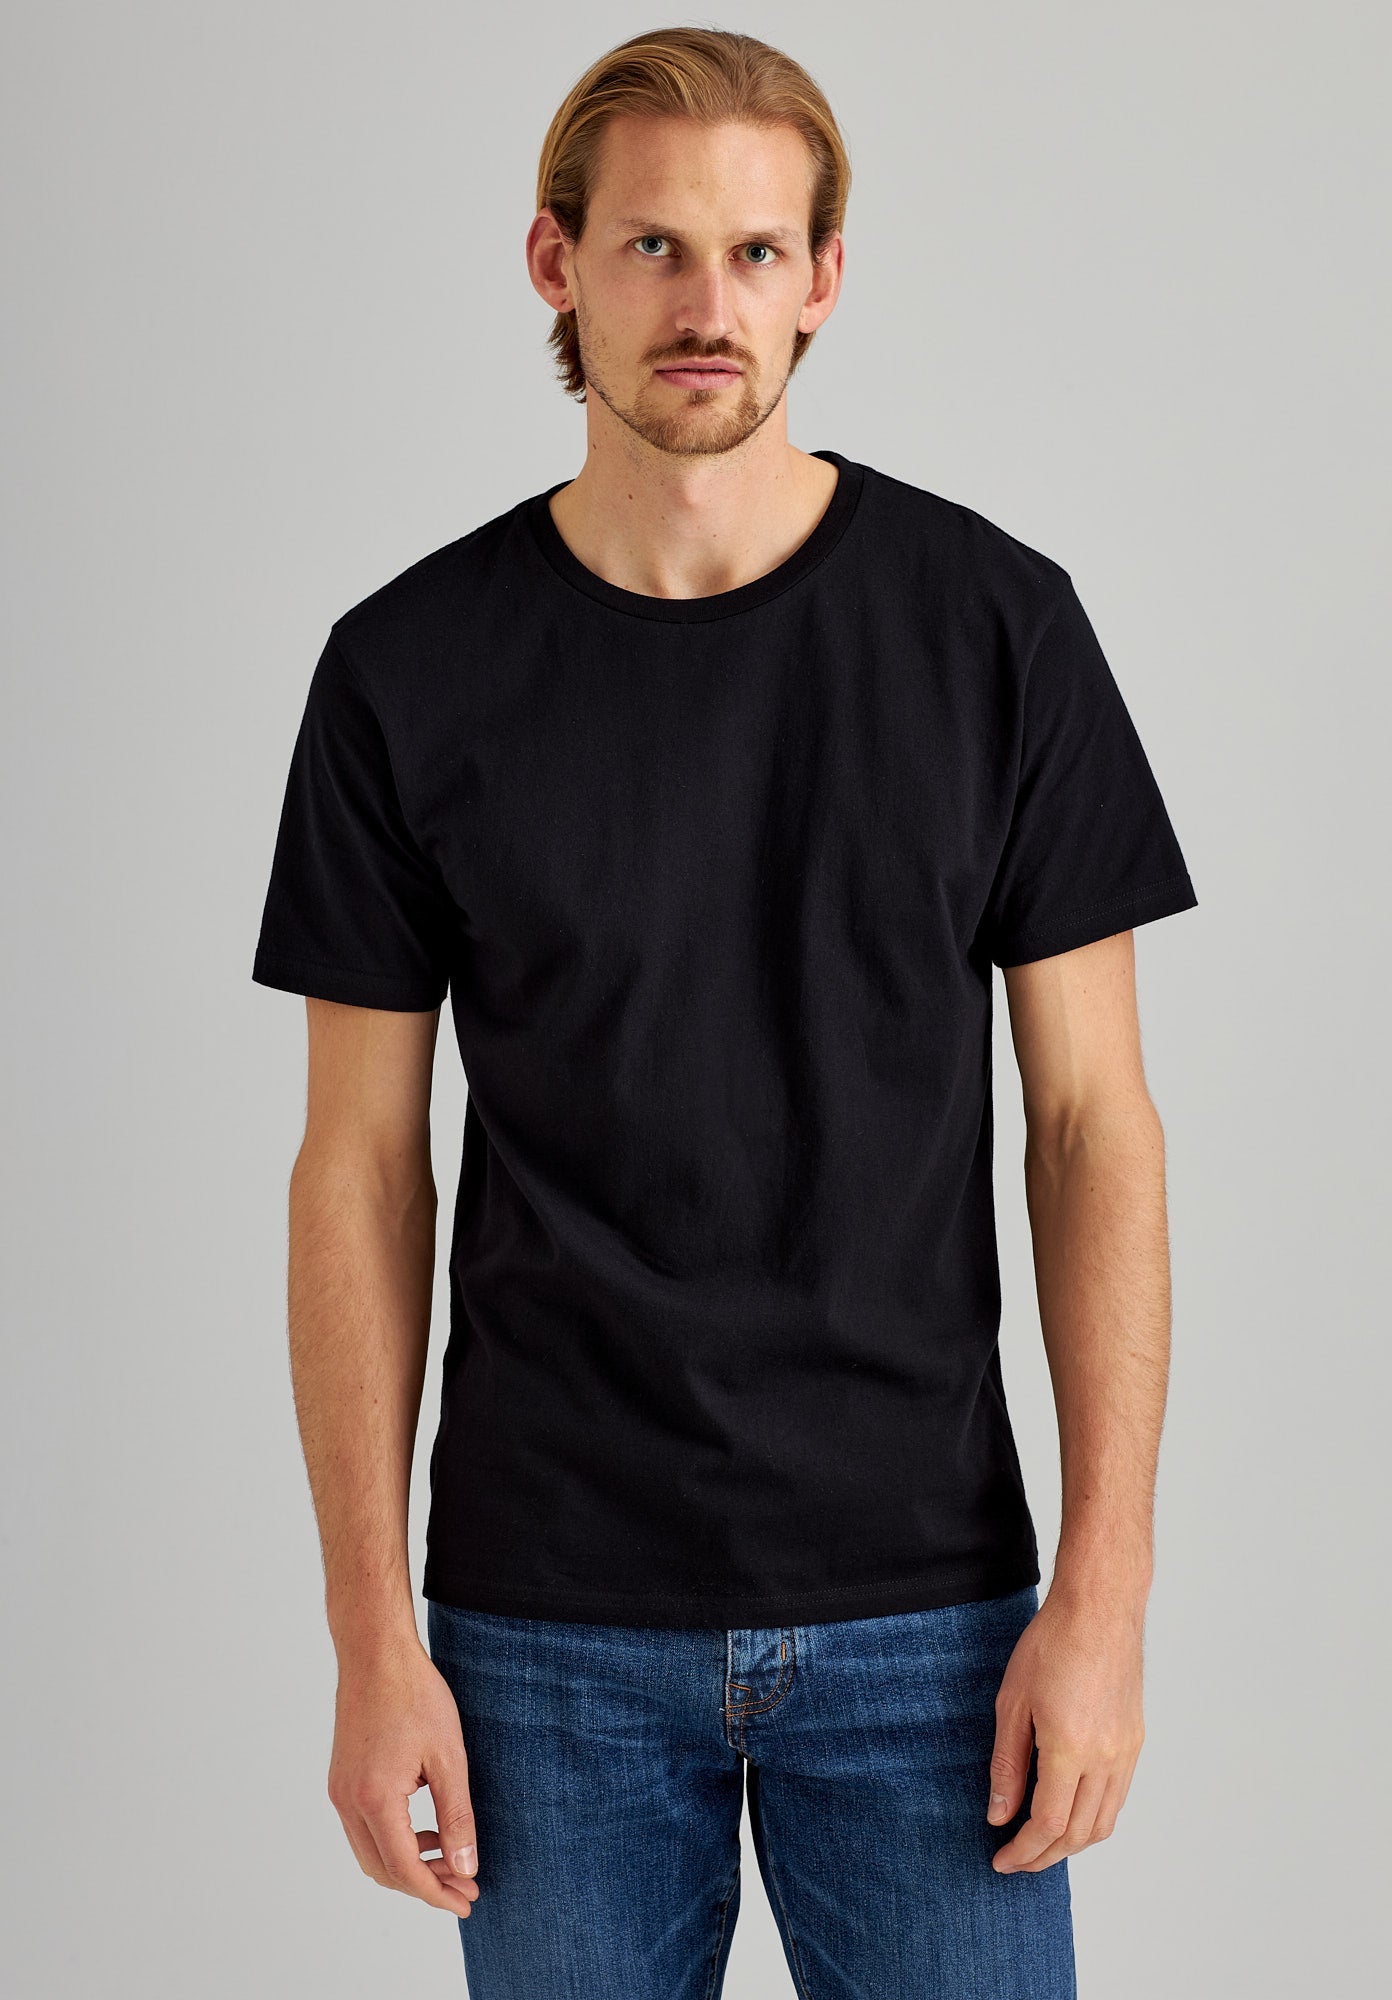 Black T-shirt 3-pack TT02 made of organic cotton from Thokkthokk